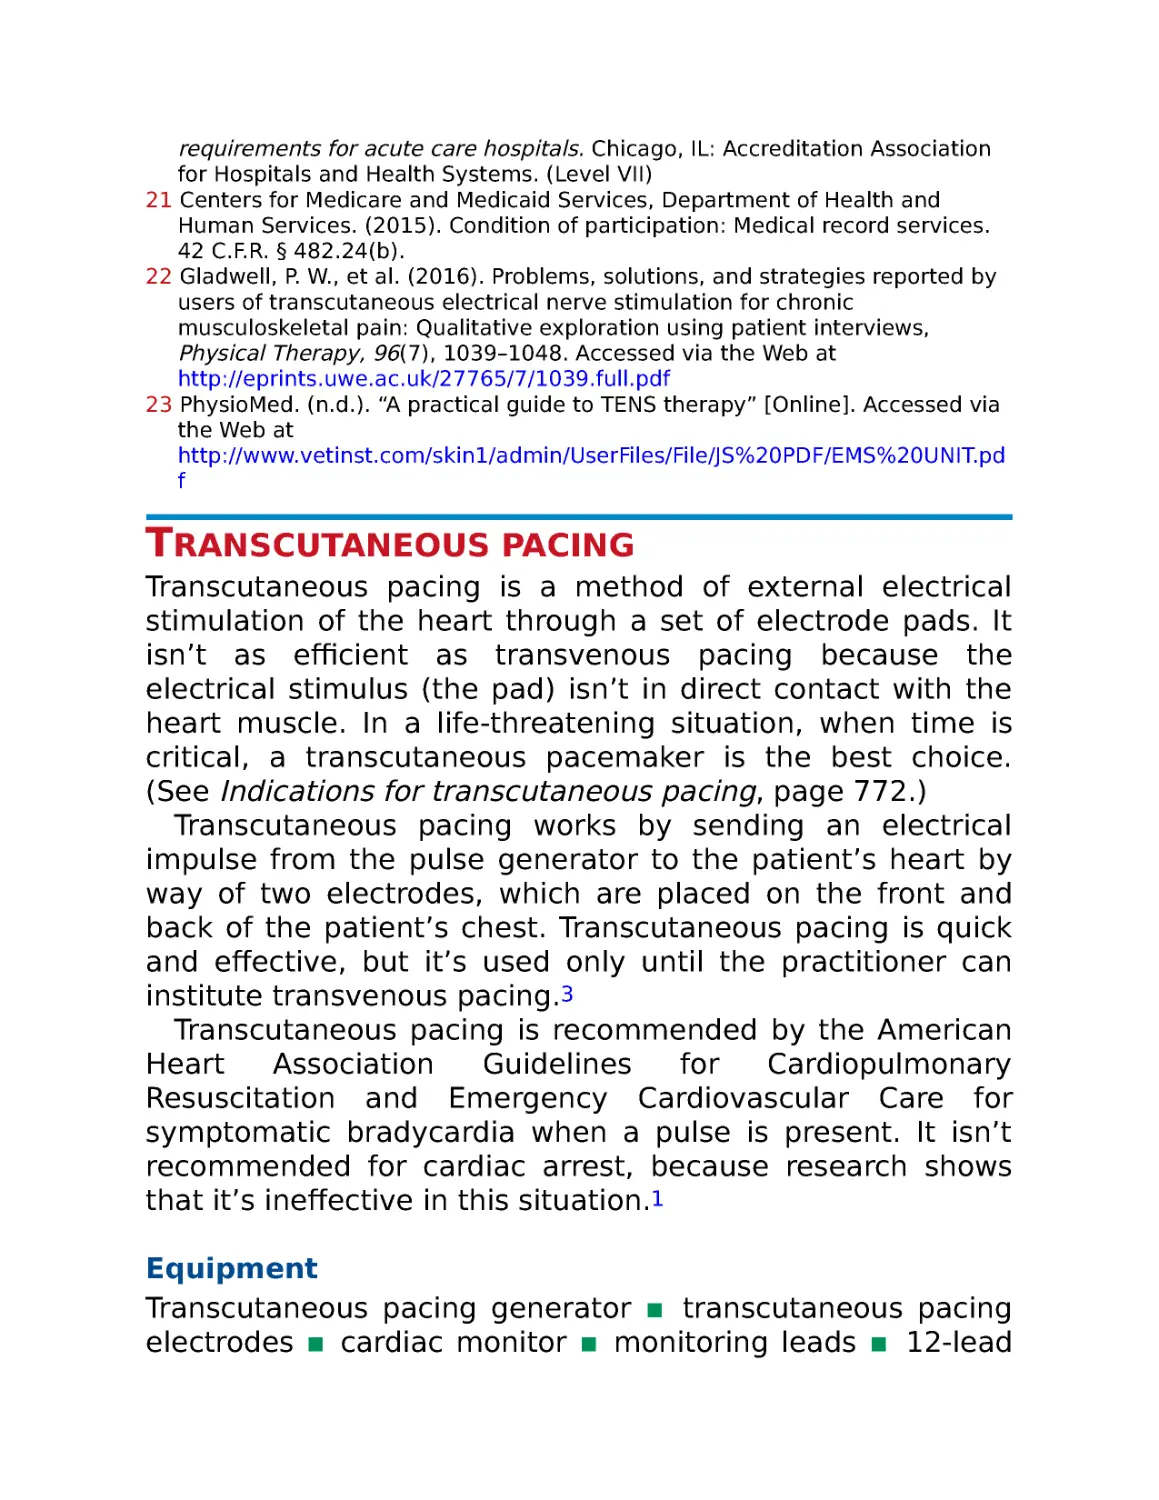 Transcutaneous pacing